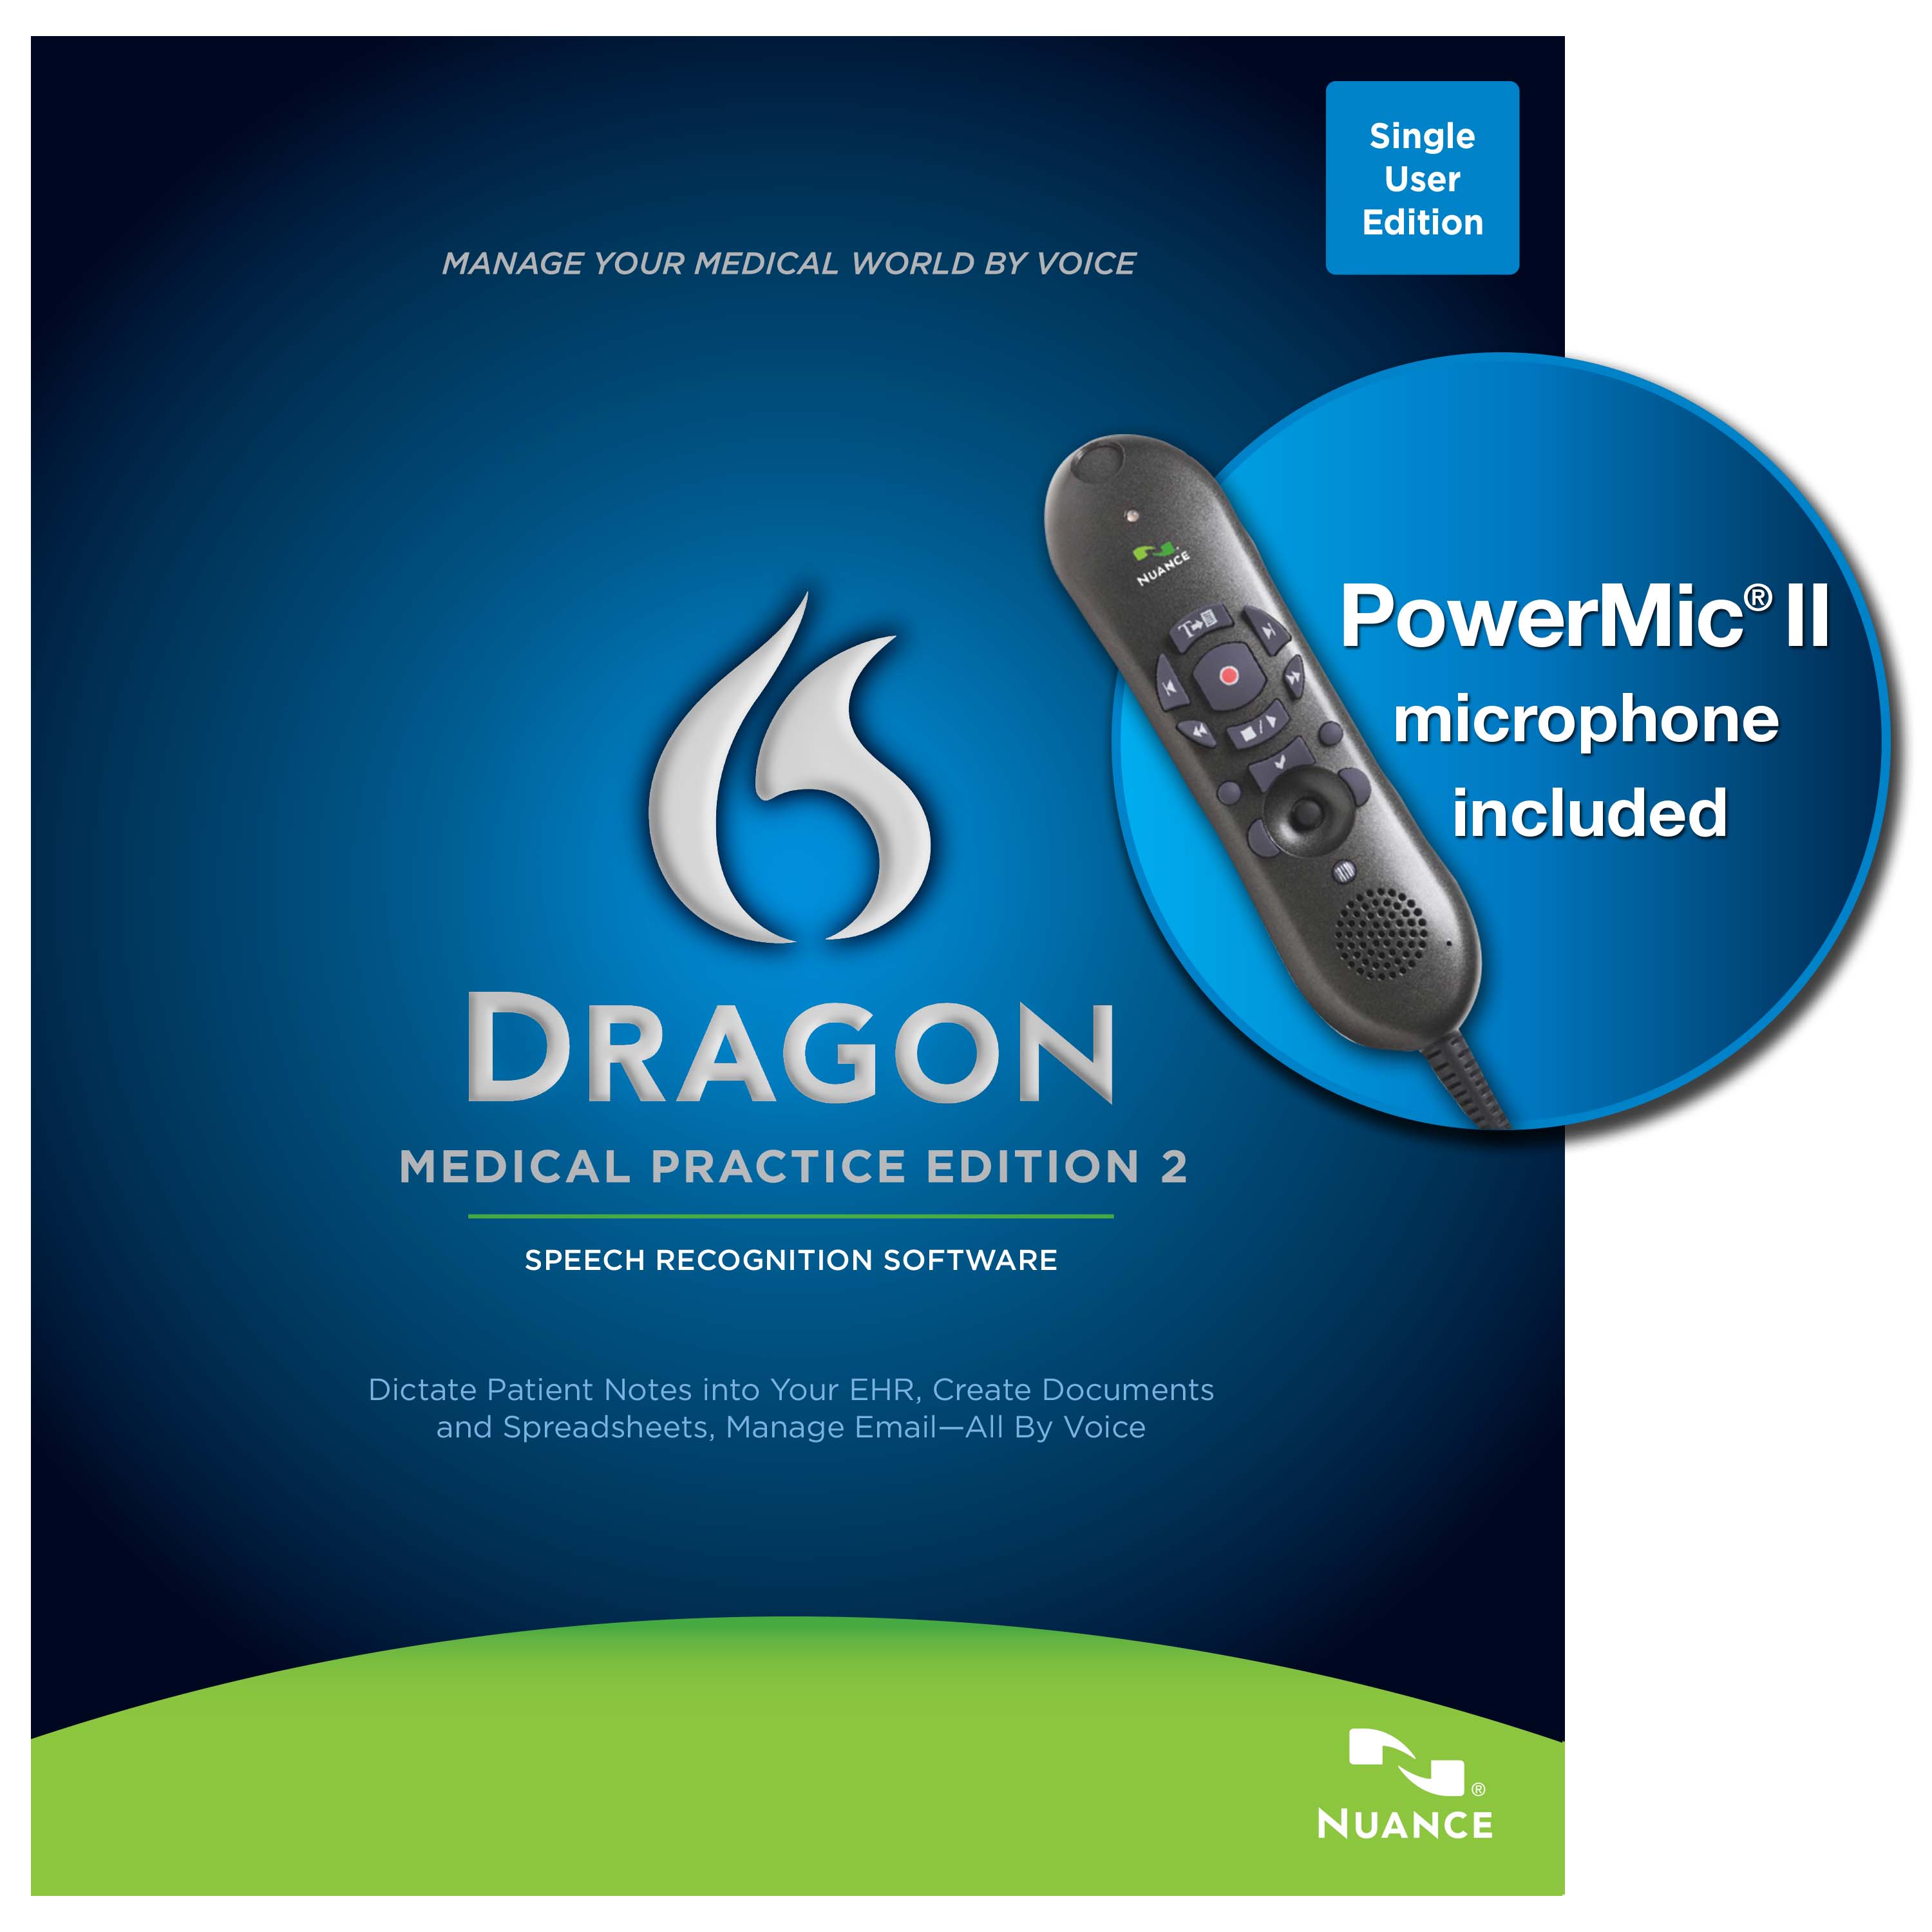 Dragon medical practice edition with powermic ii